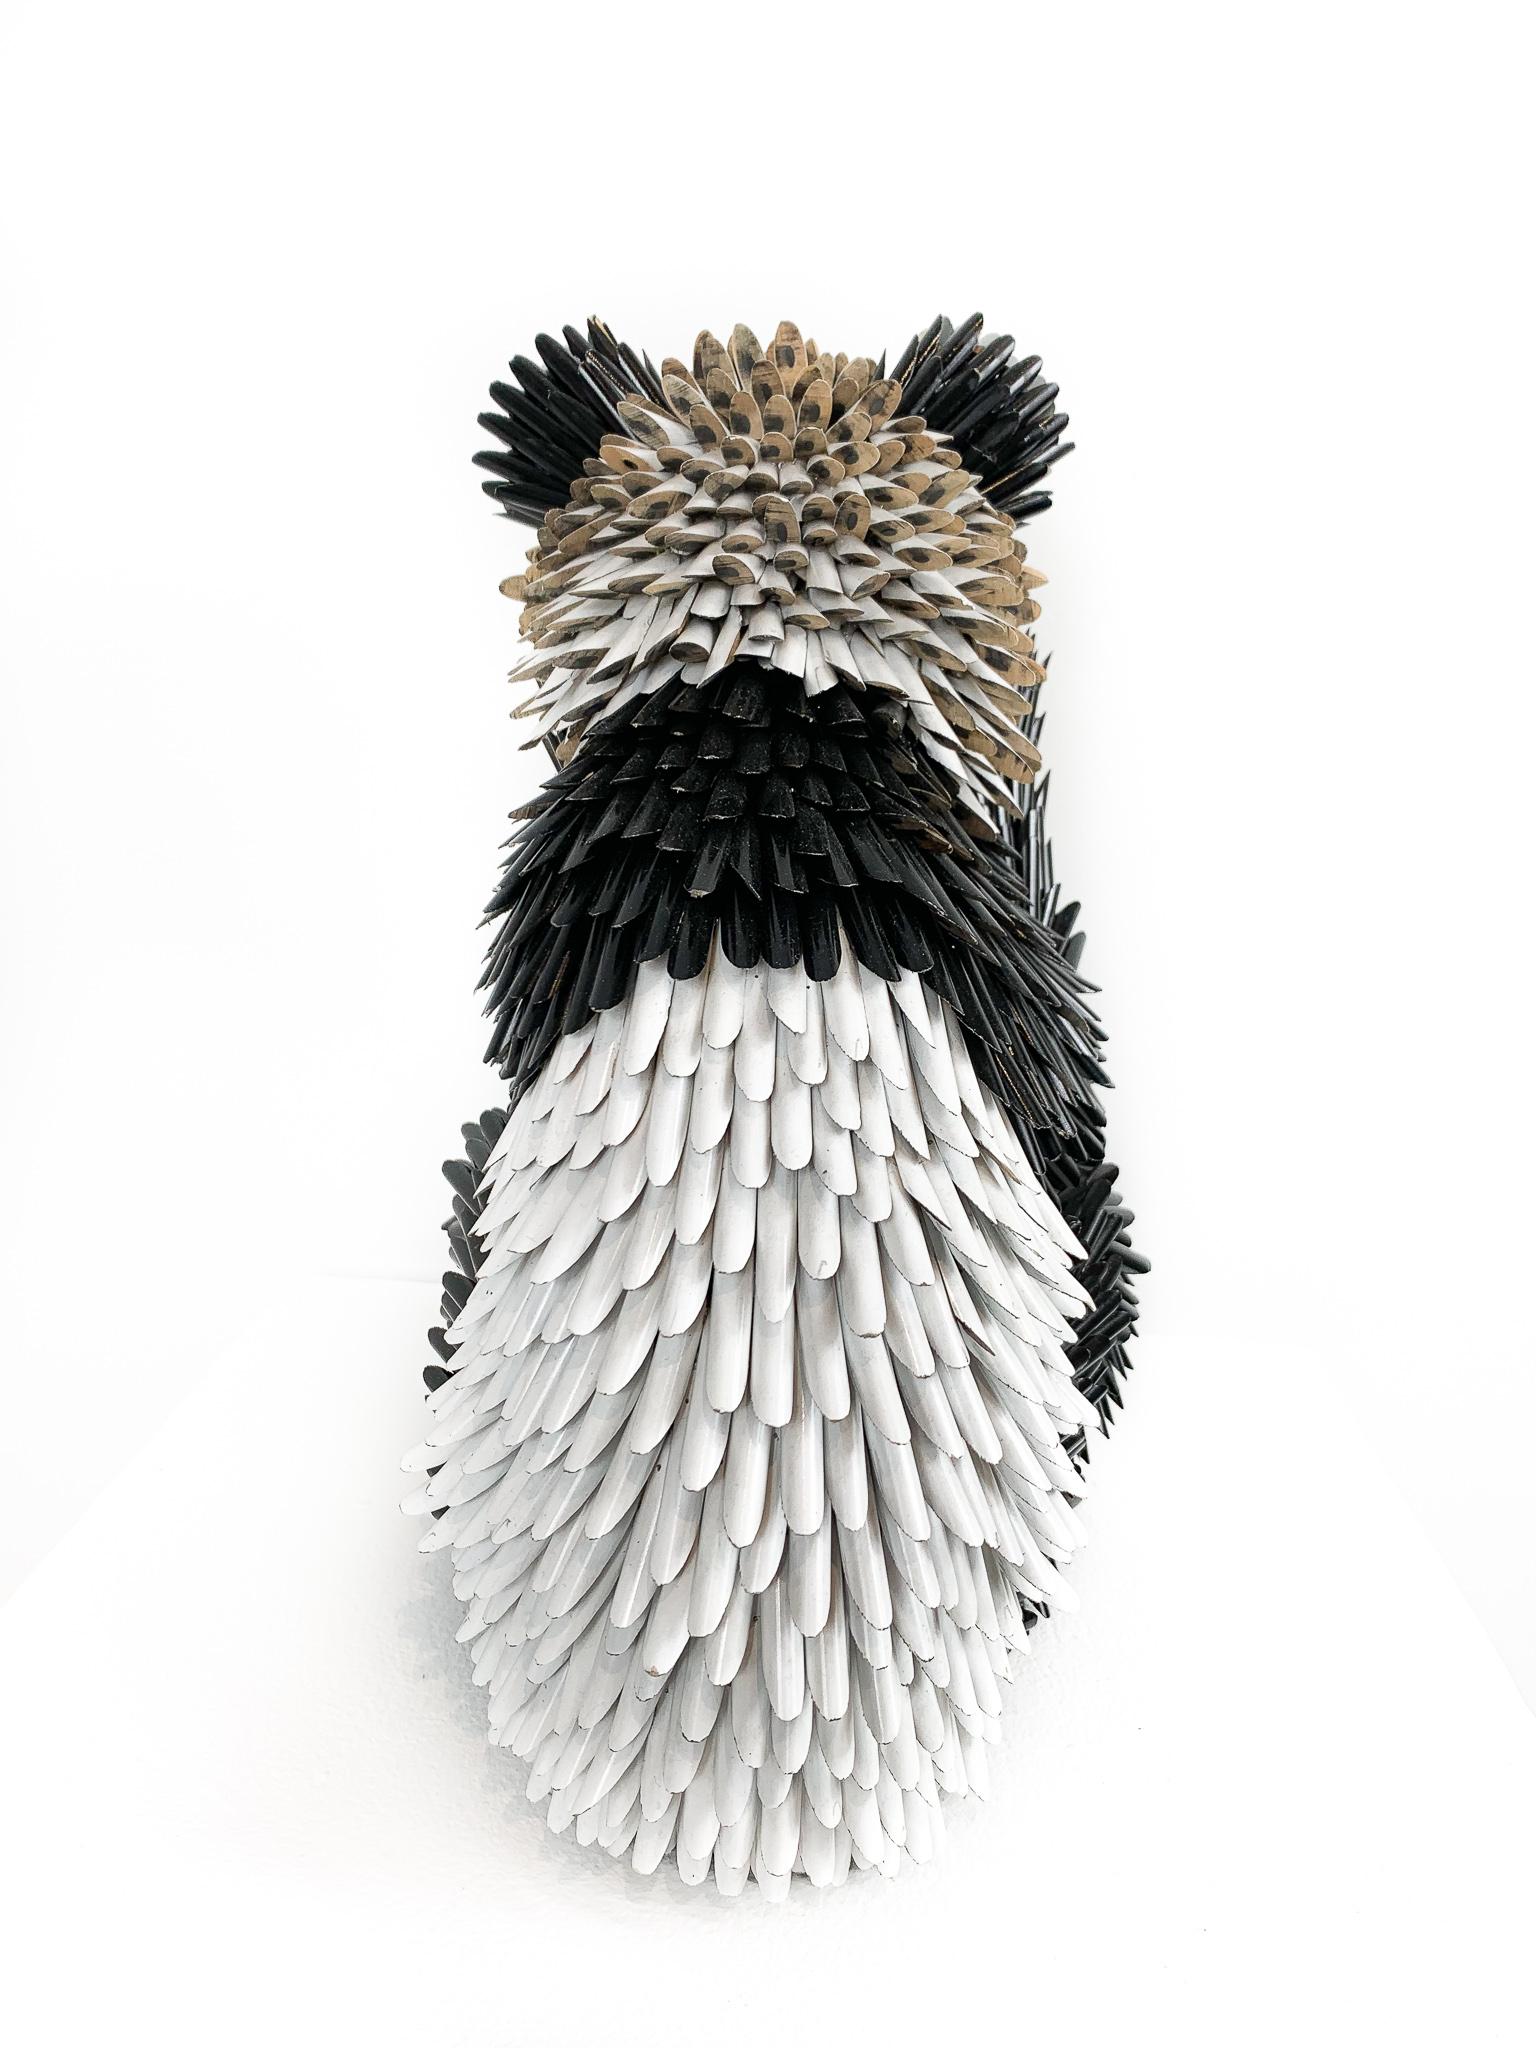 Baby Panda - Black Figurative Sculpture by Federico Uribe